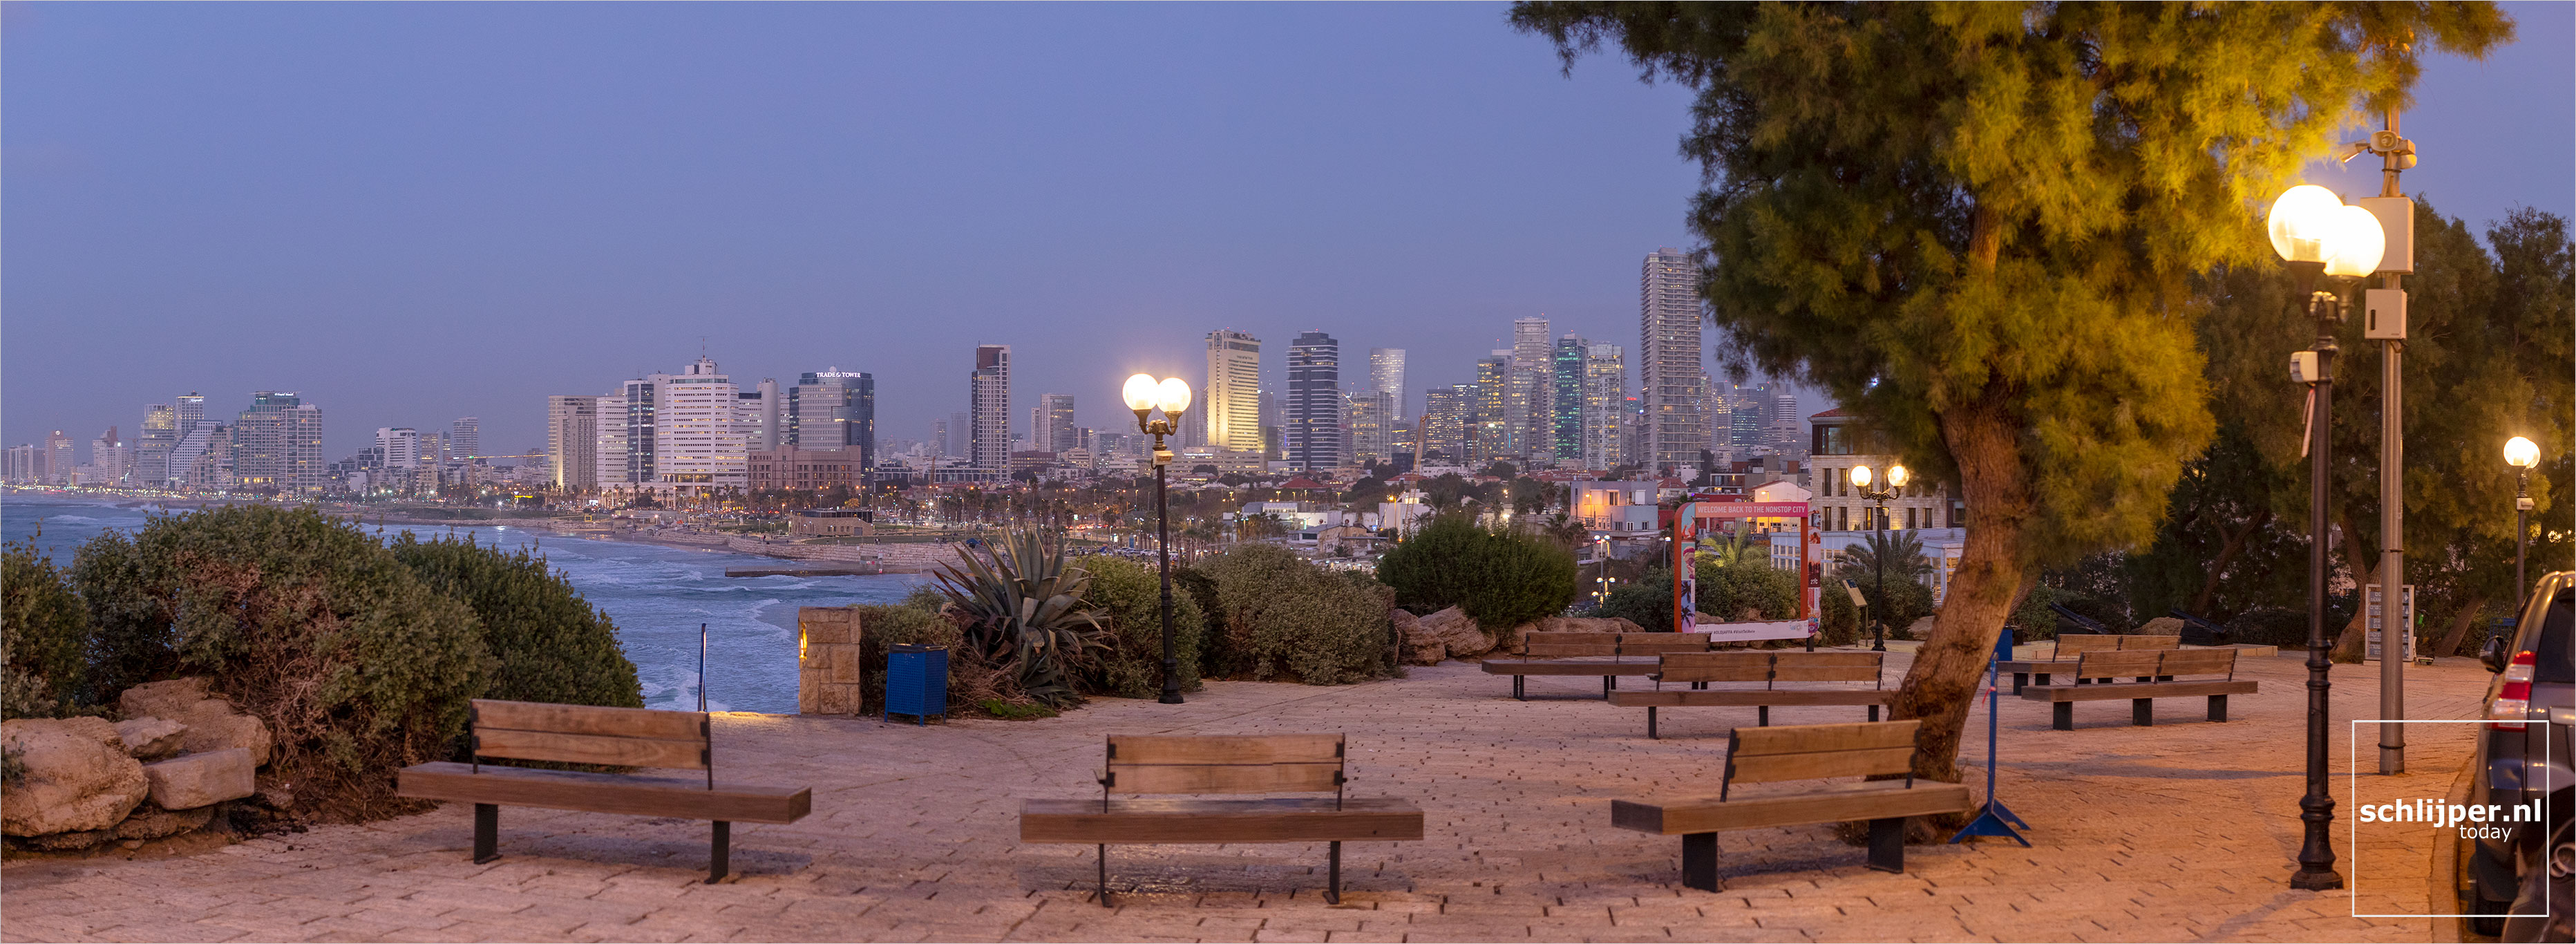 Israel, Jaffa, 10 januari 2022